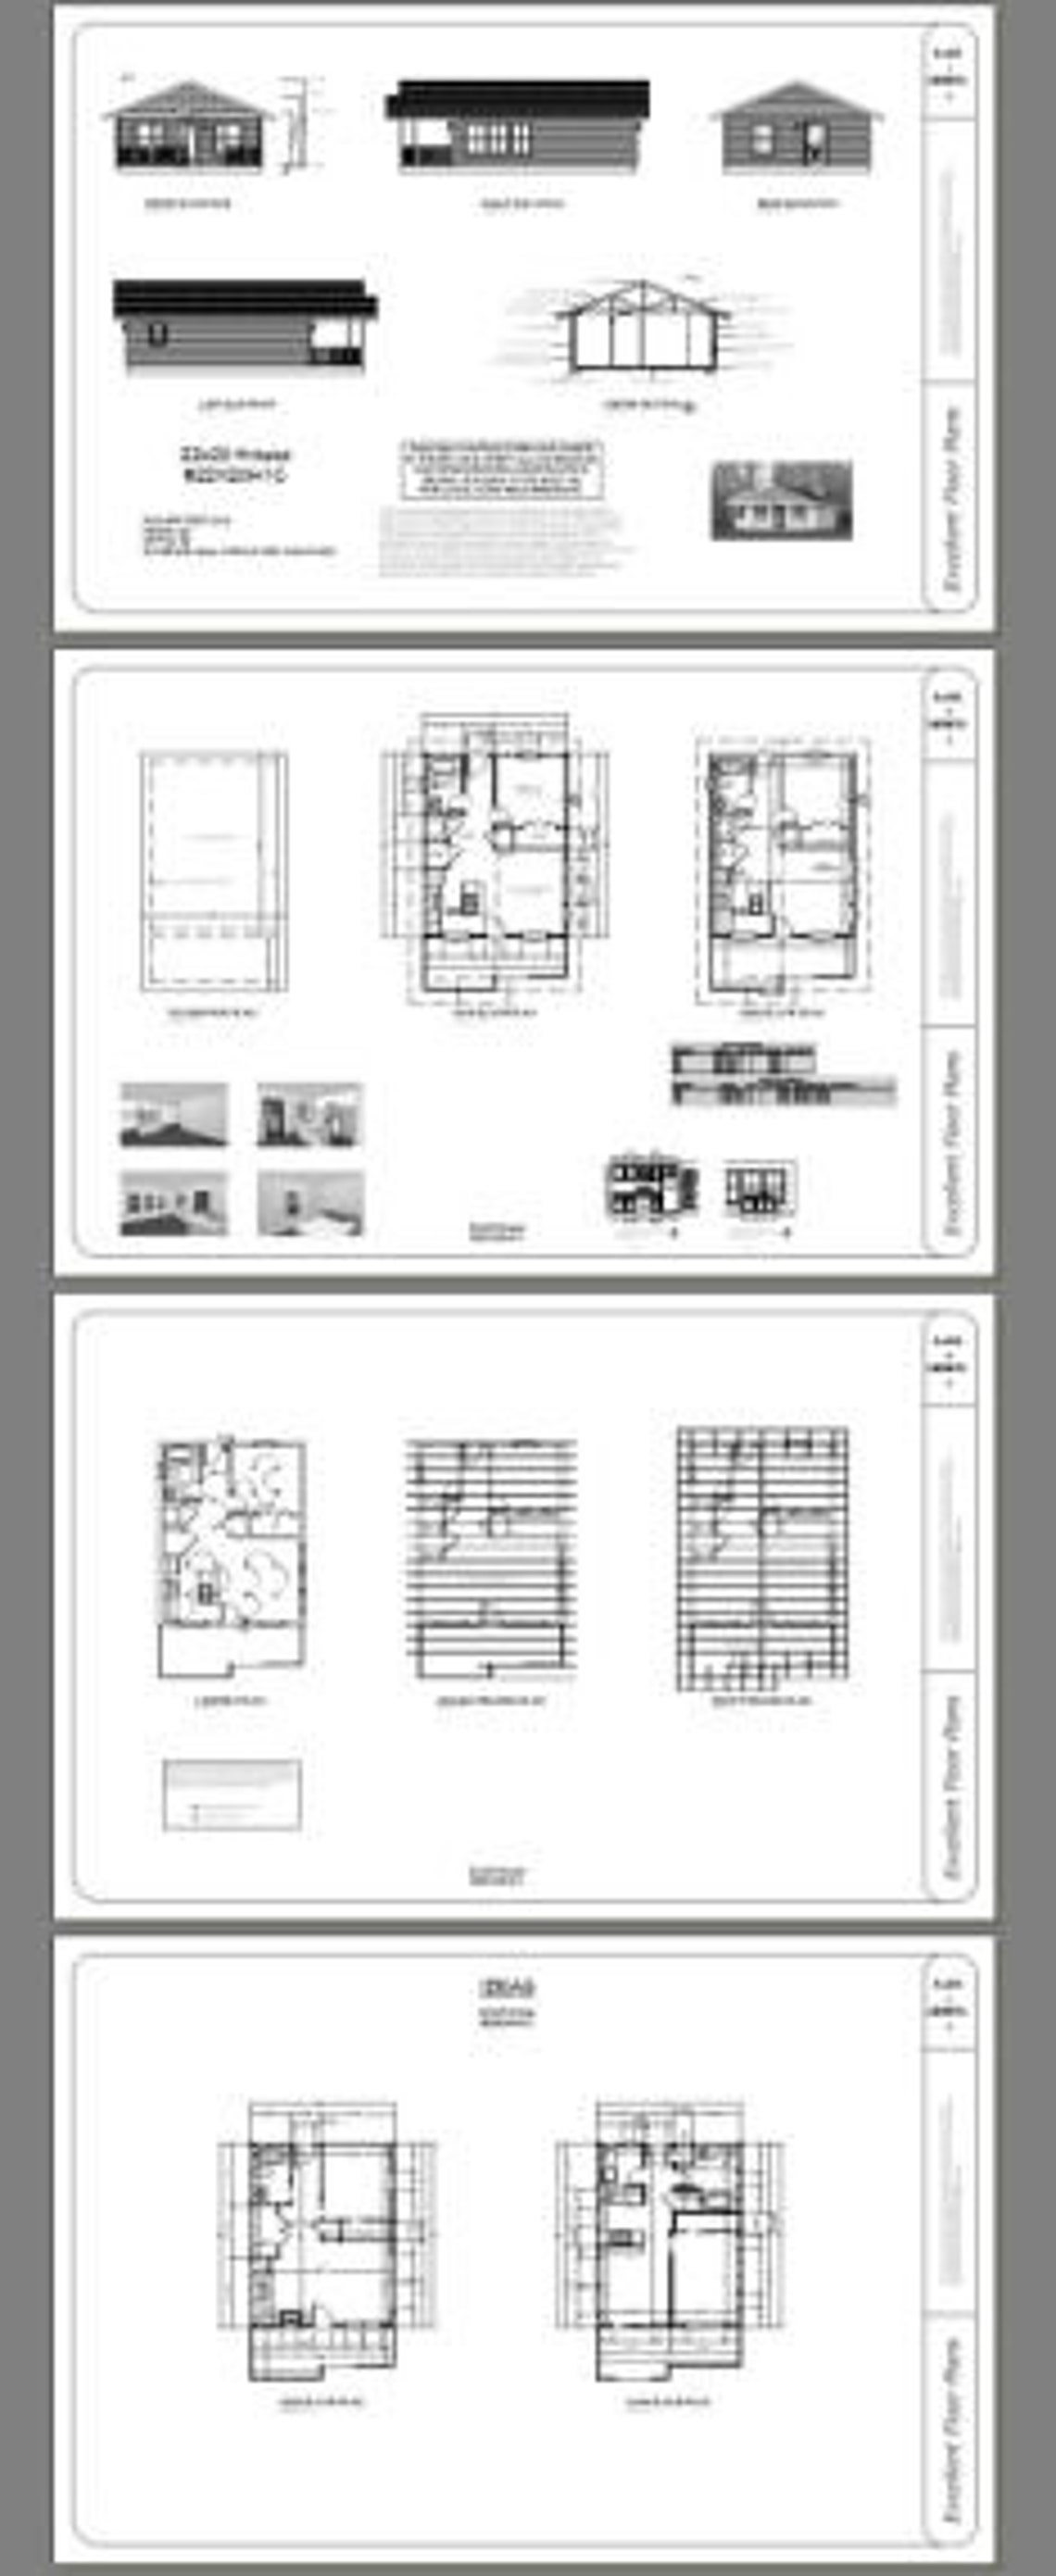 22x28 House 1-bedroom 1-bath 616 Sq Ft PDF Floor Plan - Etsy